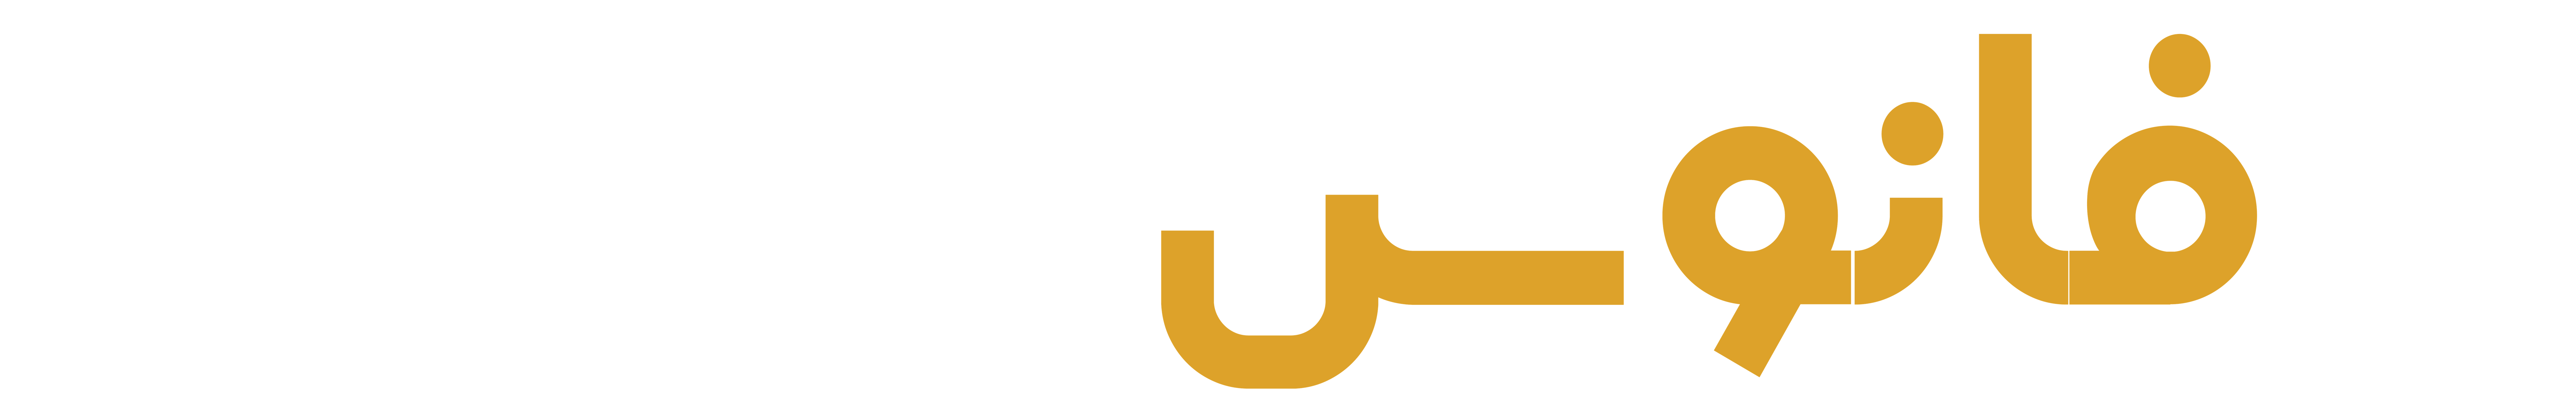 ArsalWeb-Logo